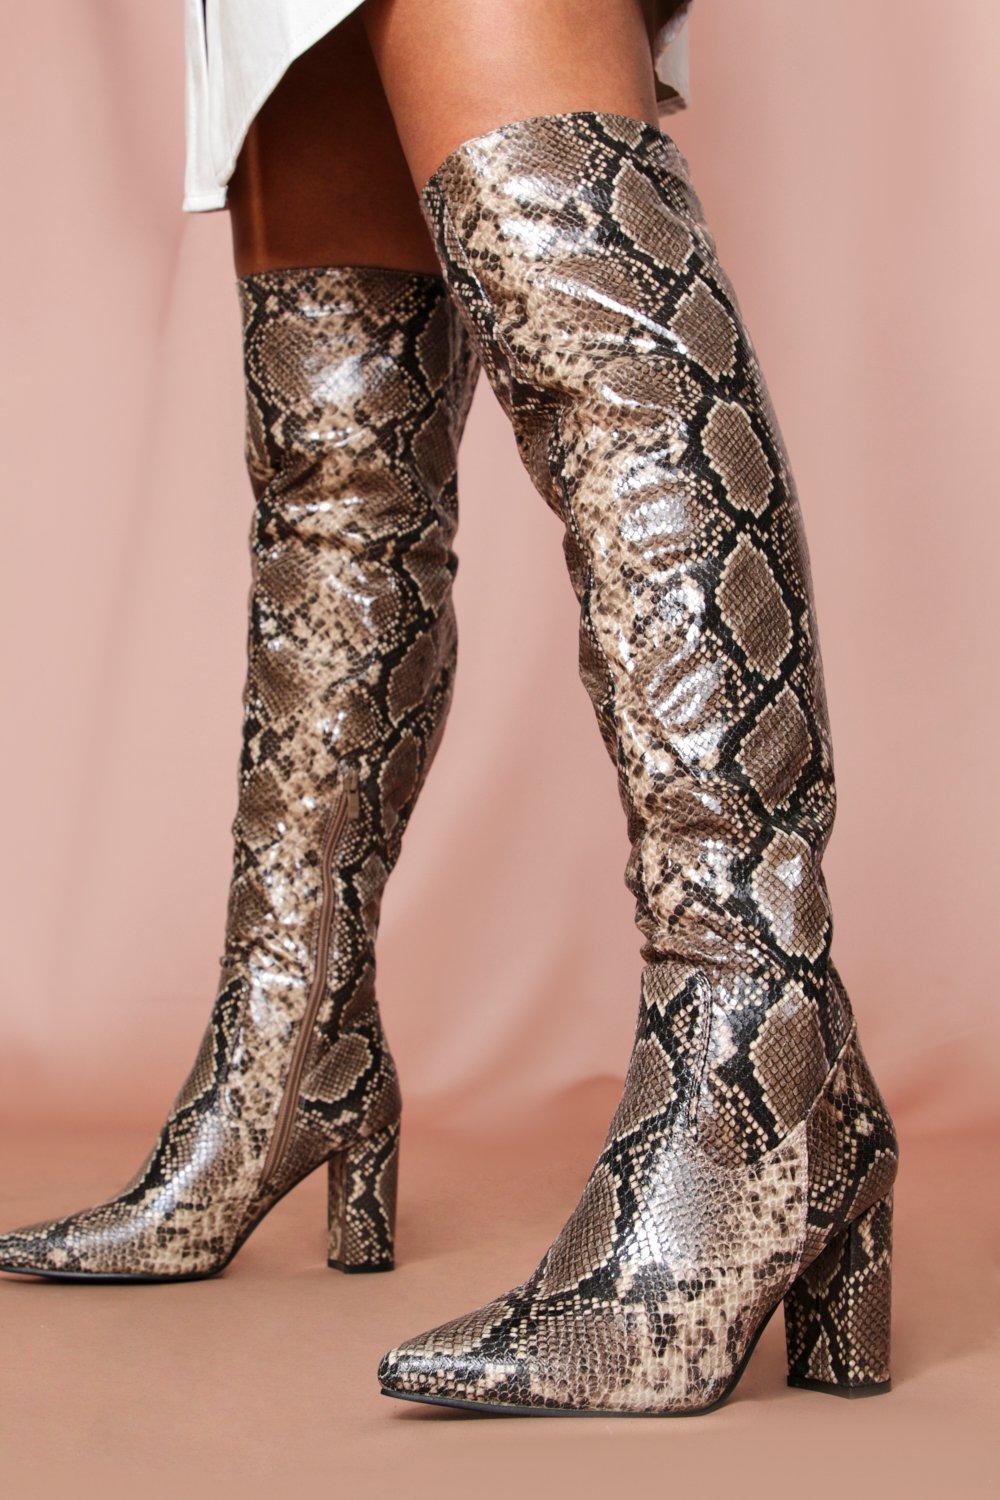 snakeskin boots thigh high